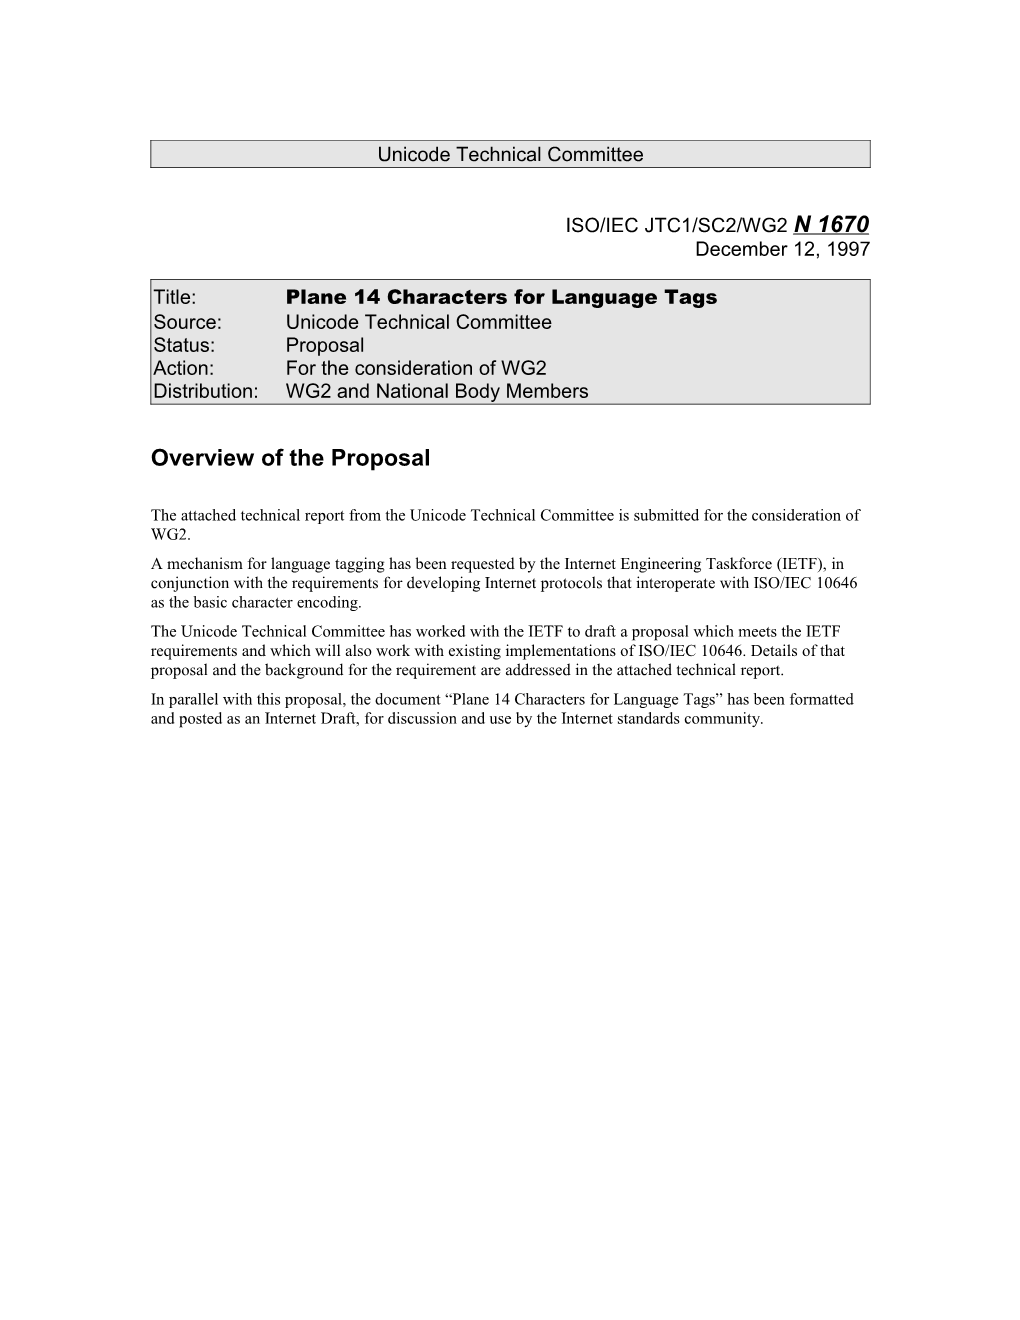 Document ID: X3L2/96-111 and UTC #71(1996-12-05)